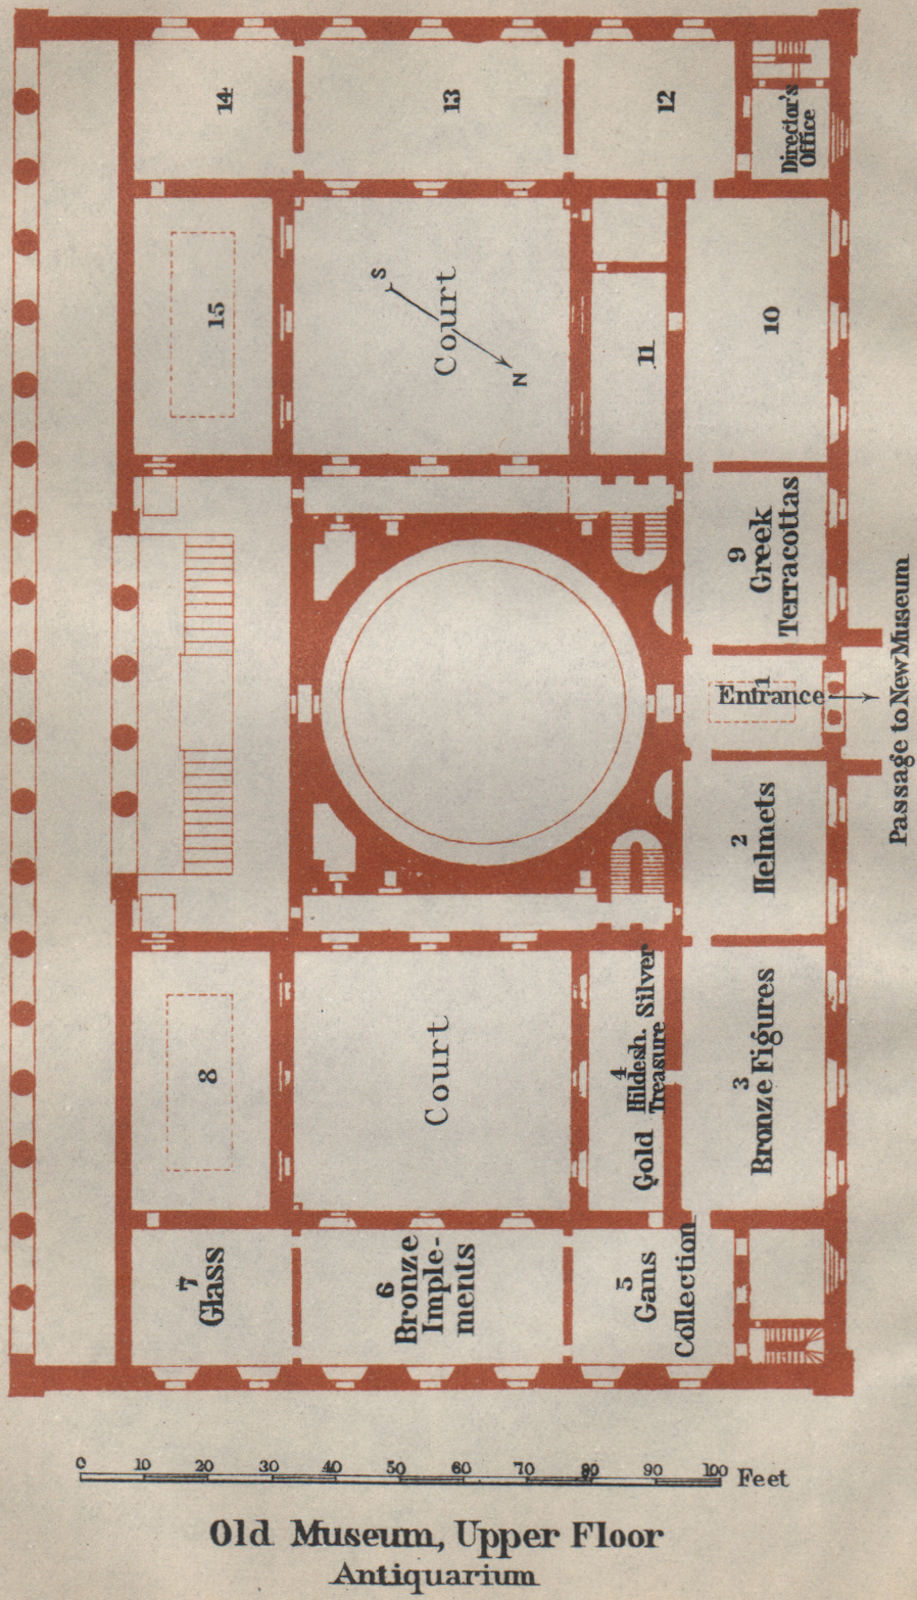 ALTES/OLD MUSEUM Berlin. Upper floor plan. Antiquarium karte. SMALL 1923 map